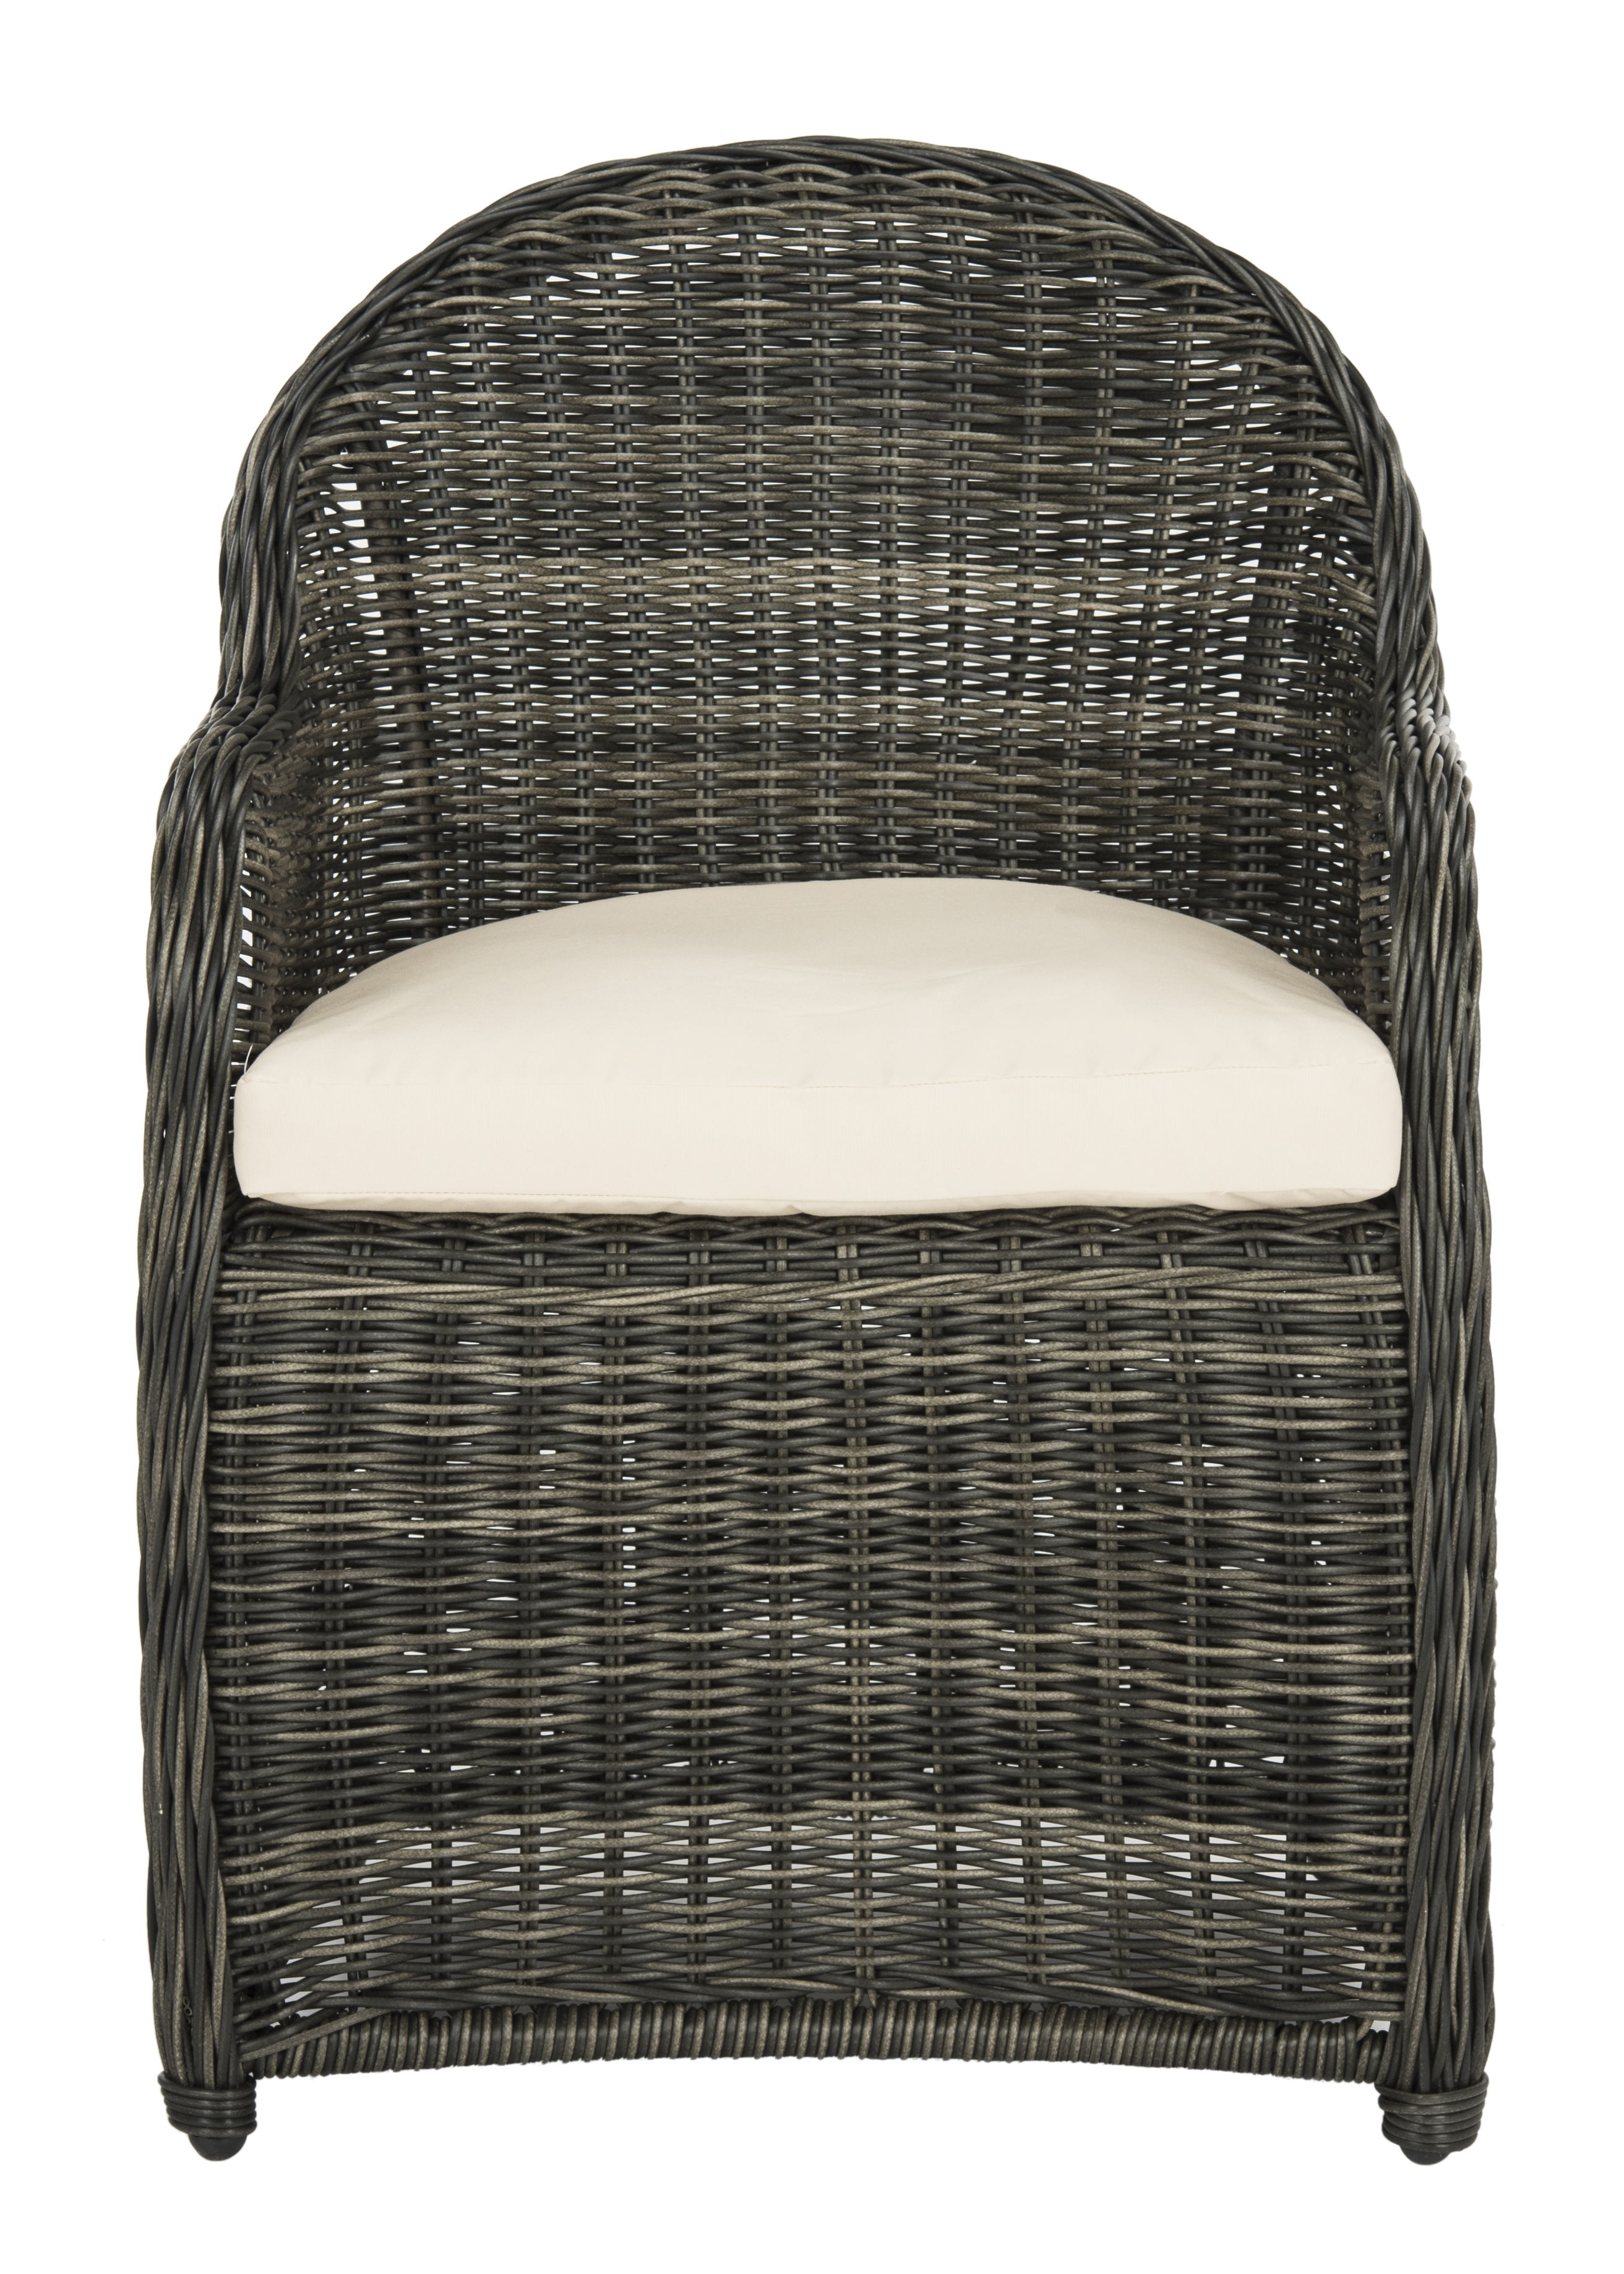 Newton Wicker Arm Chair With Cushion - Grey/Beige - Arlo Home - Image 0